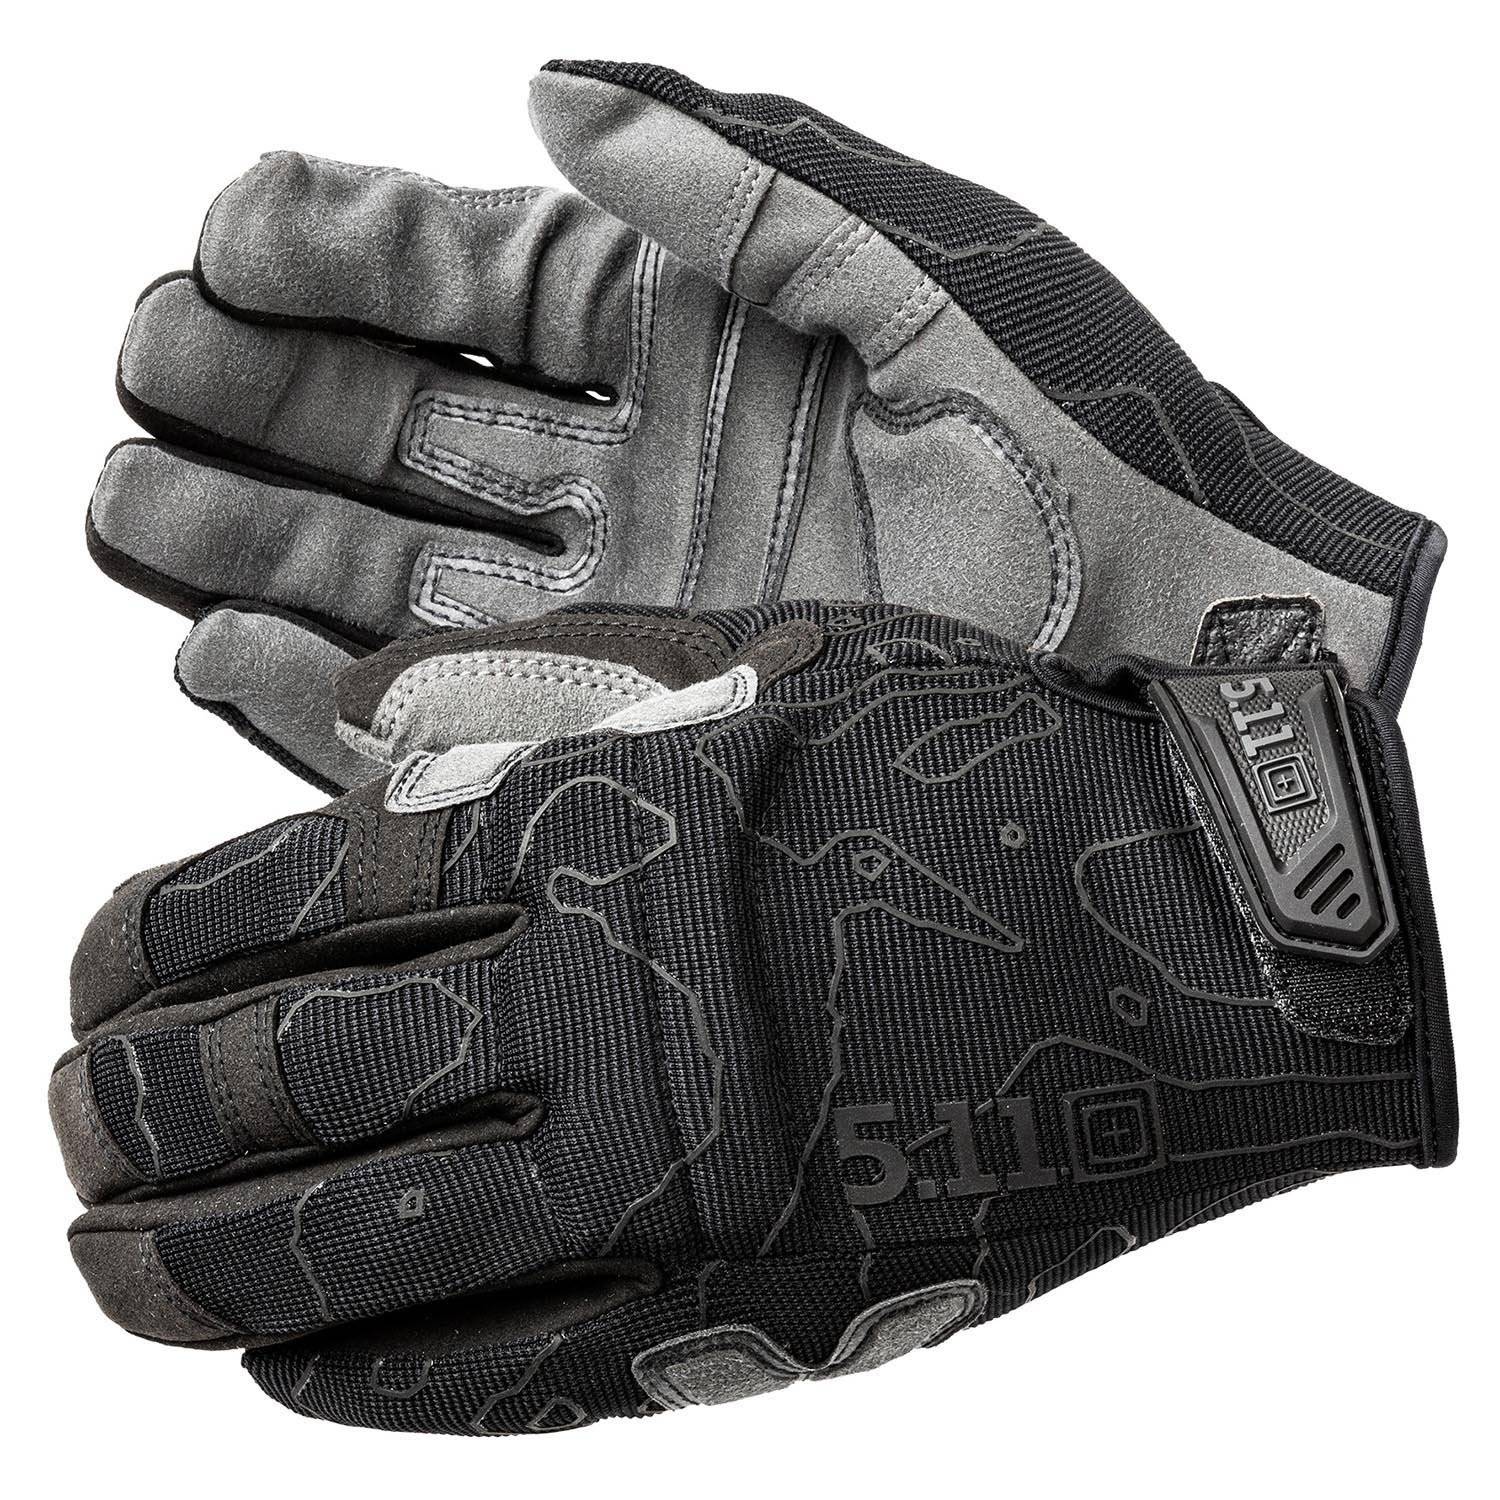 5.11 Tactical High Abrasion Pro Gloves